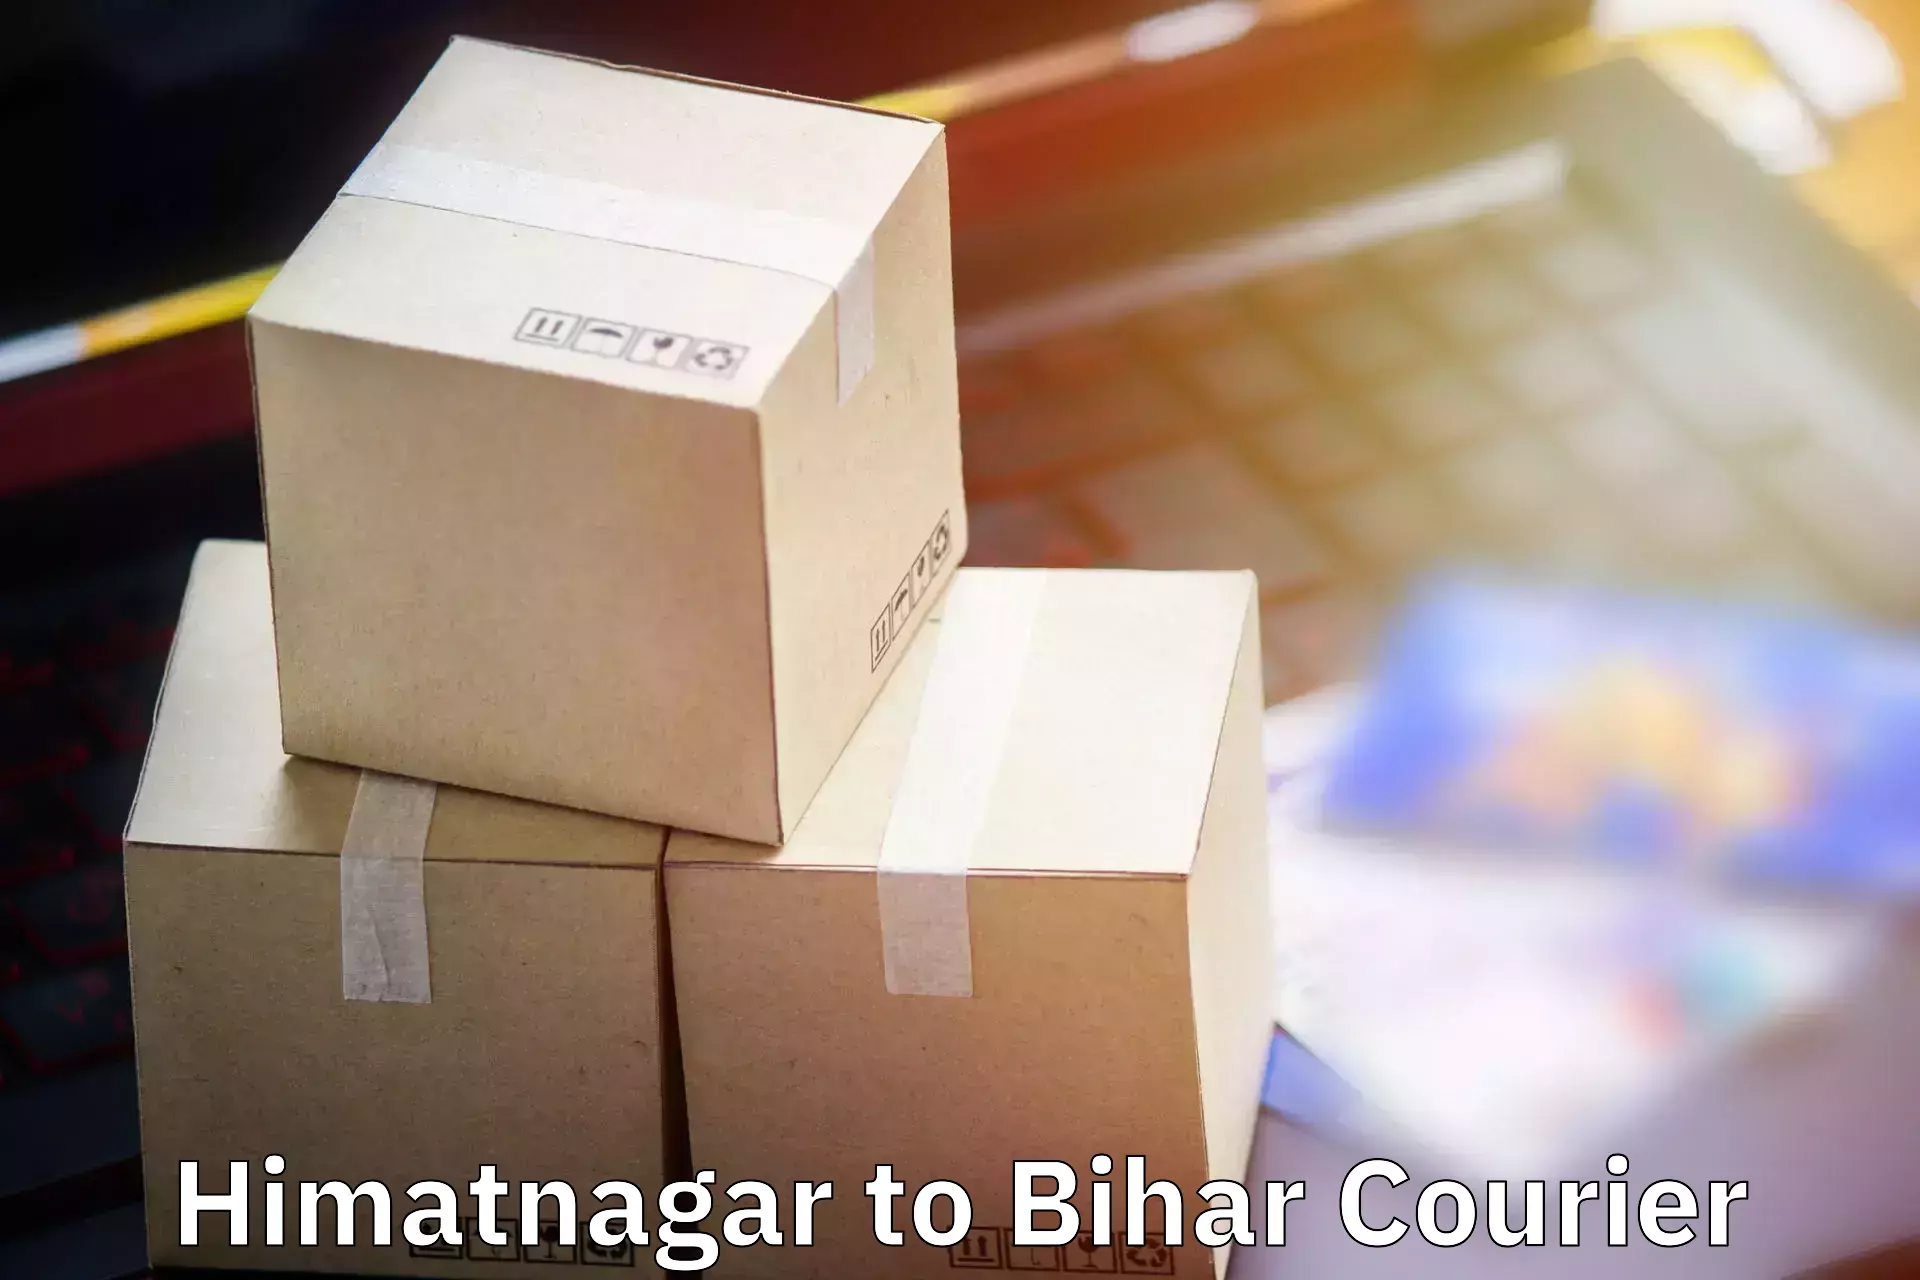 Baggage transport network Himatnagar to Mahnar Bazar